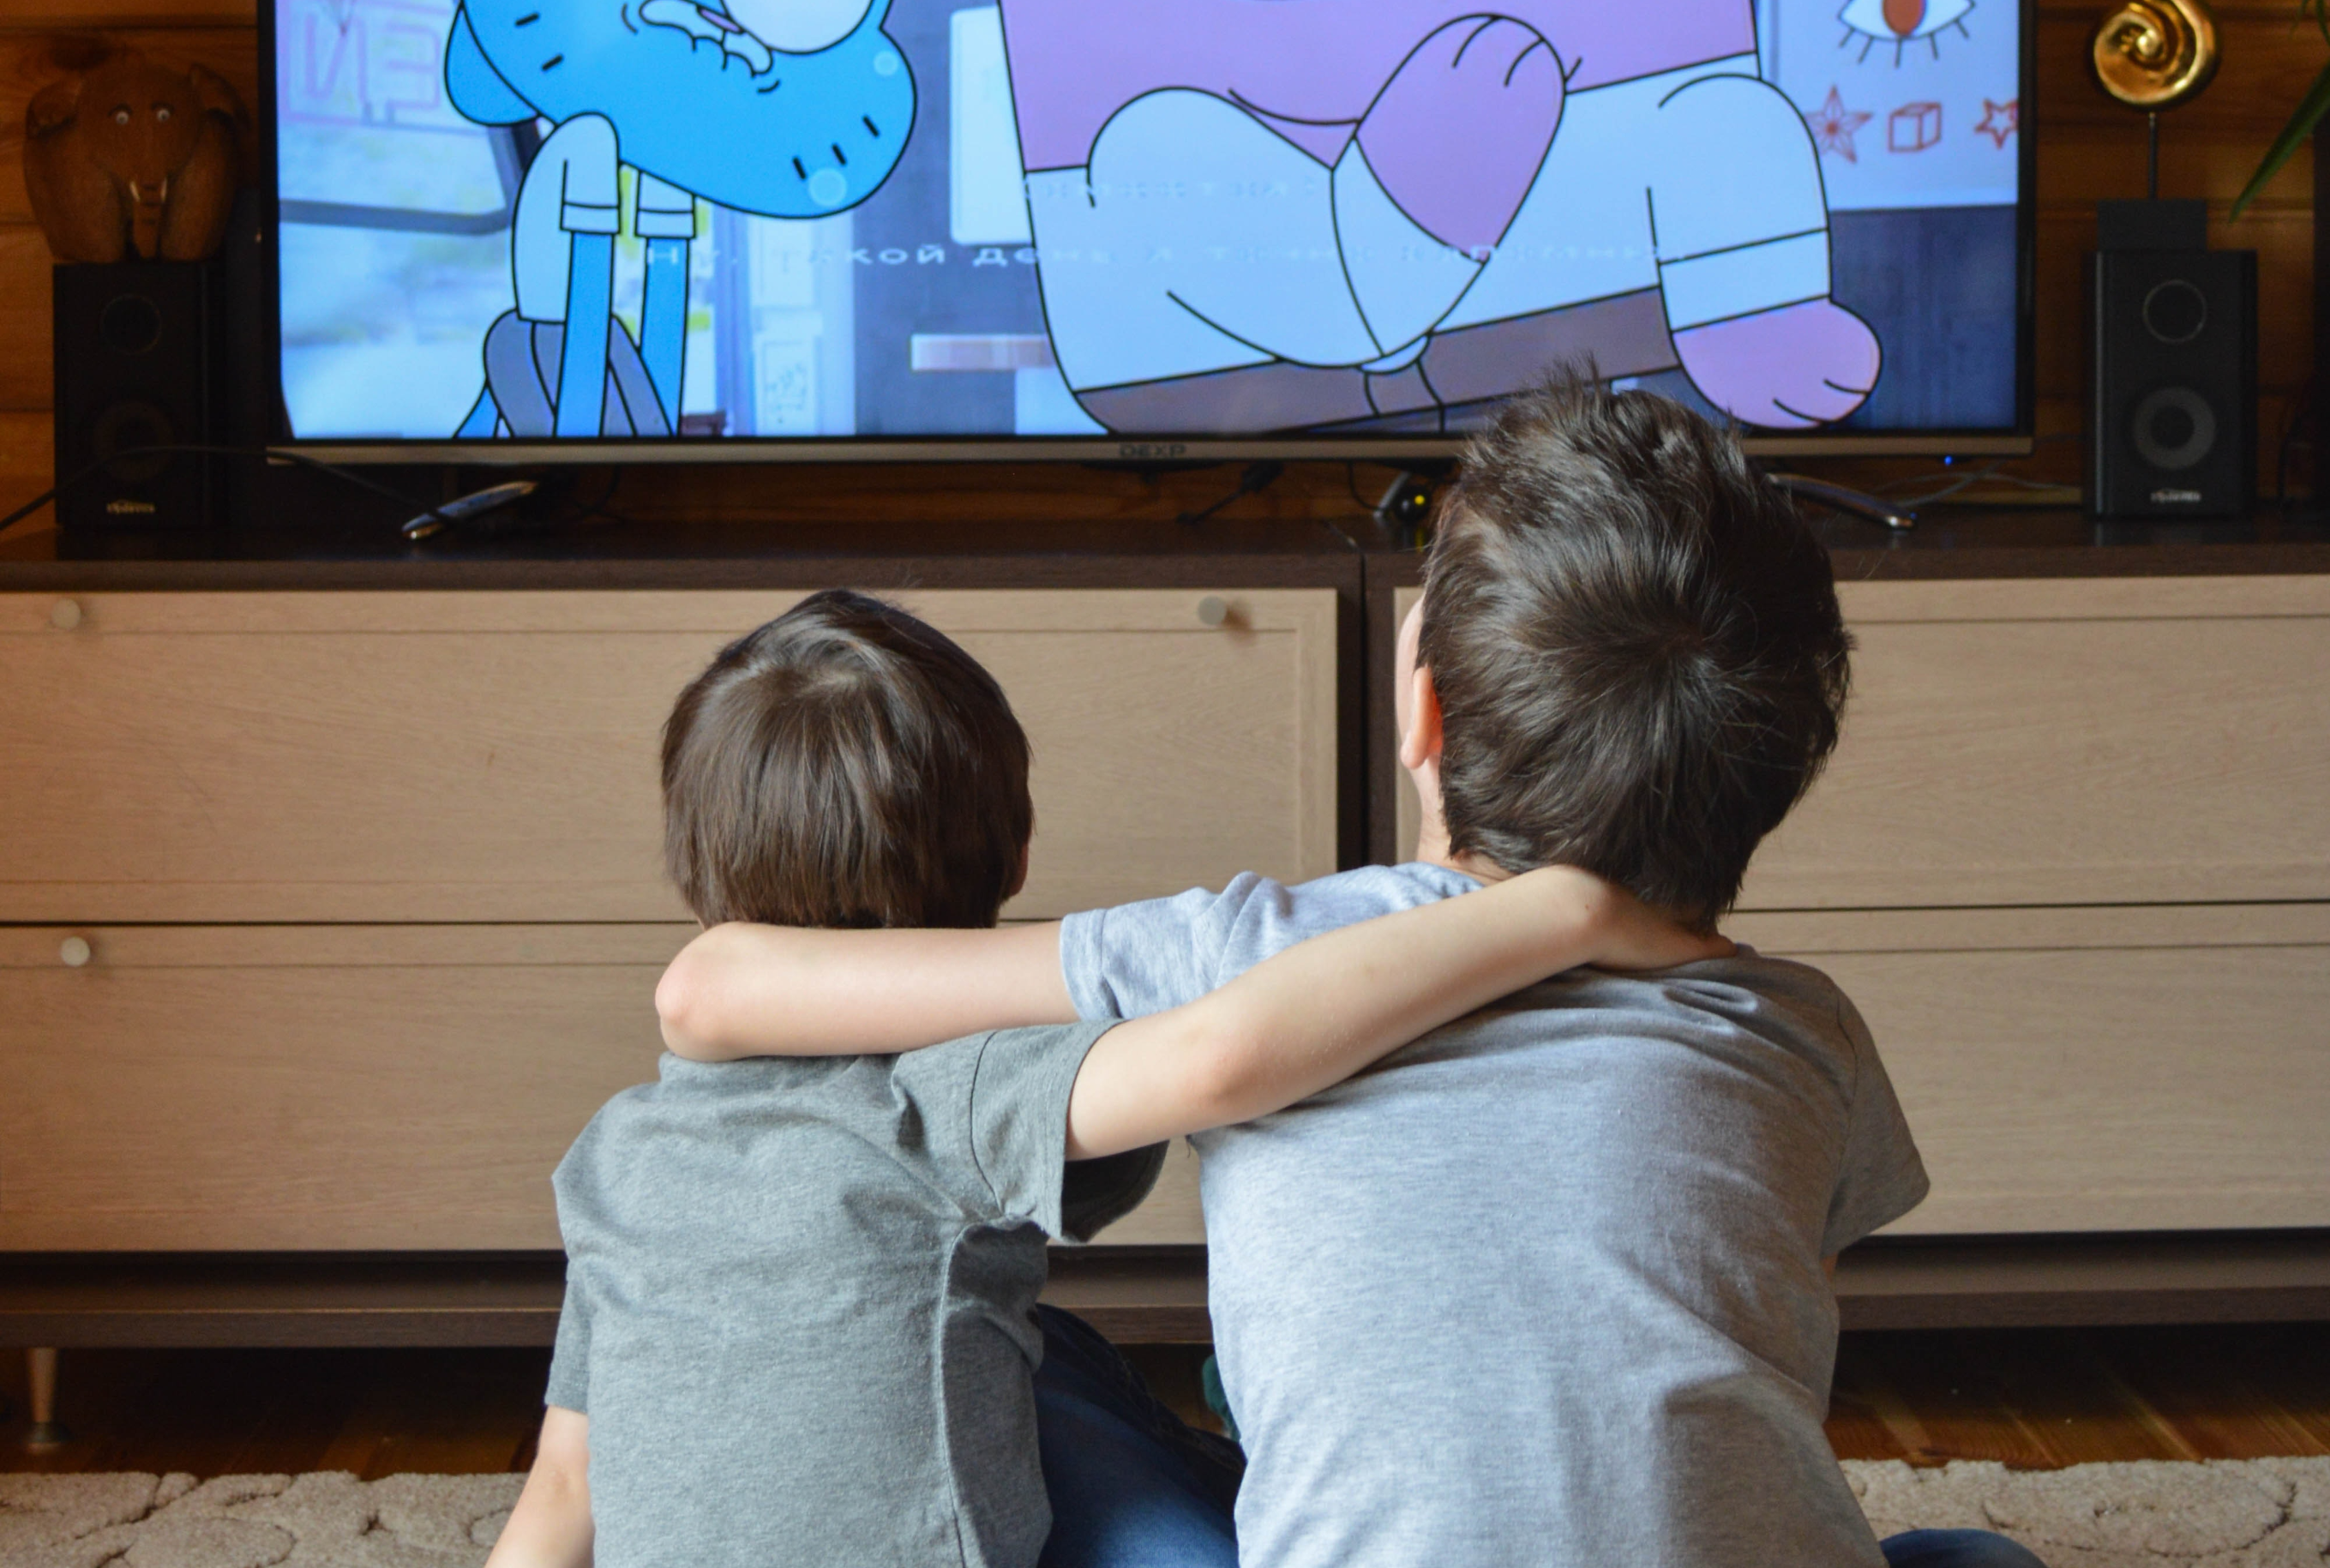 Kids watching streaming television